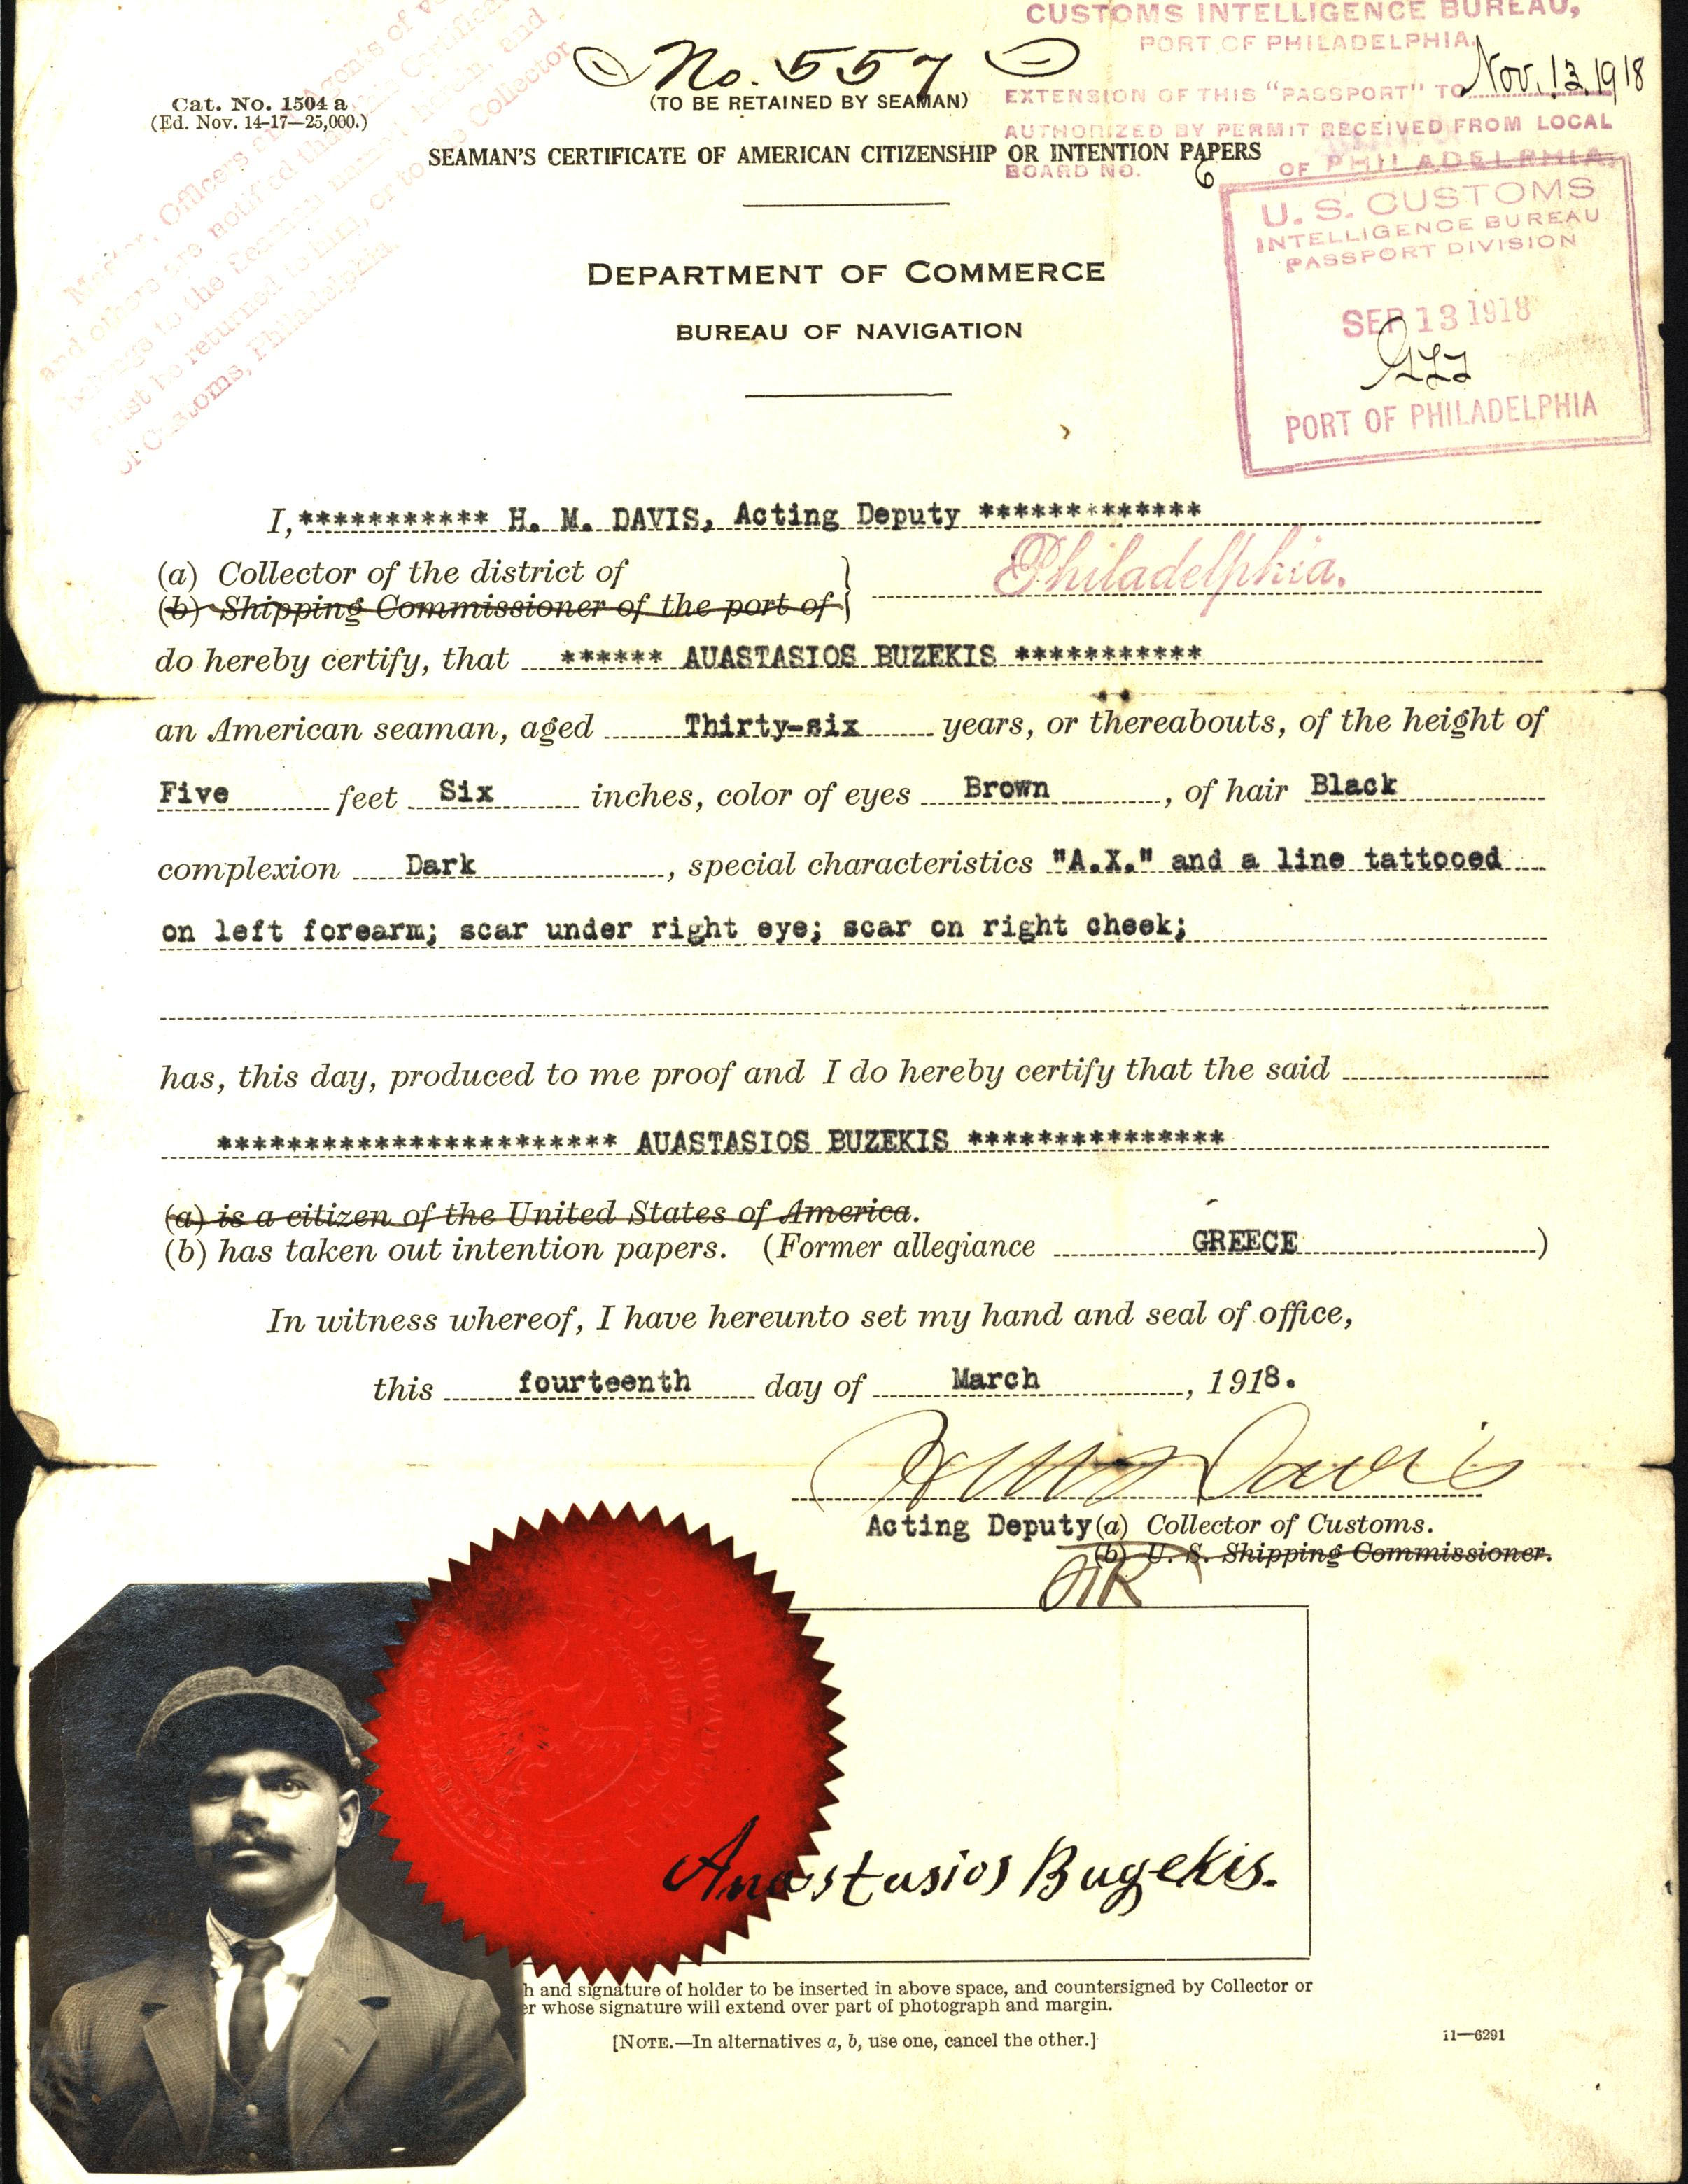 Anastasios Buzekis, seaman’s certificate of intention papers, 1918